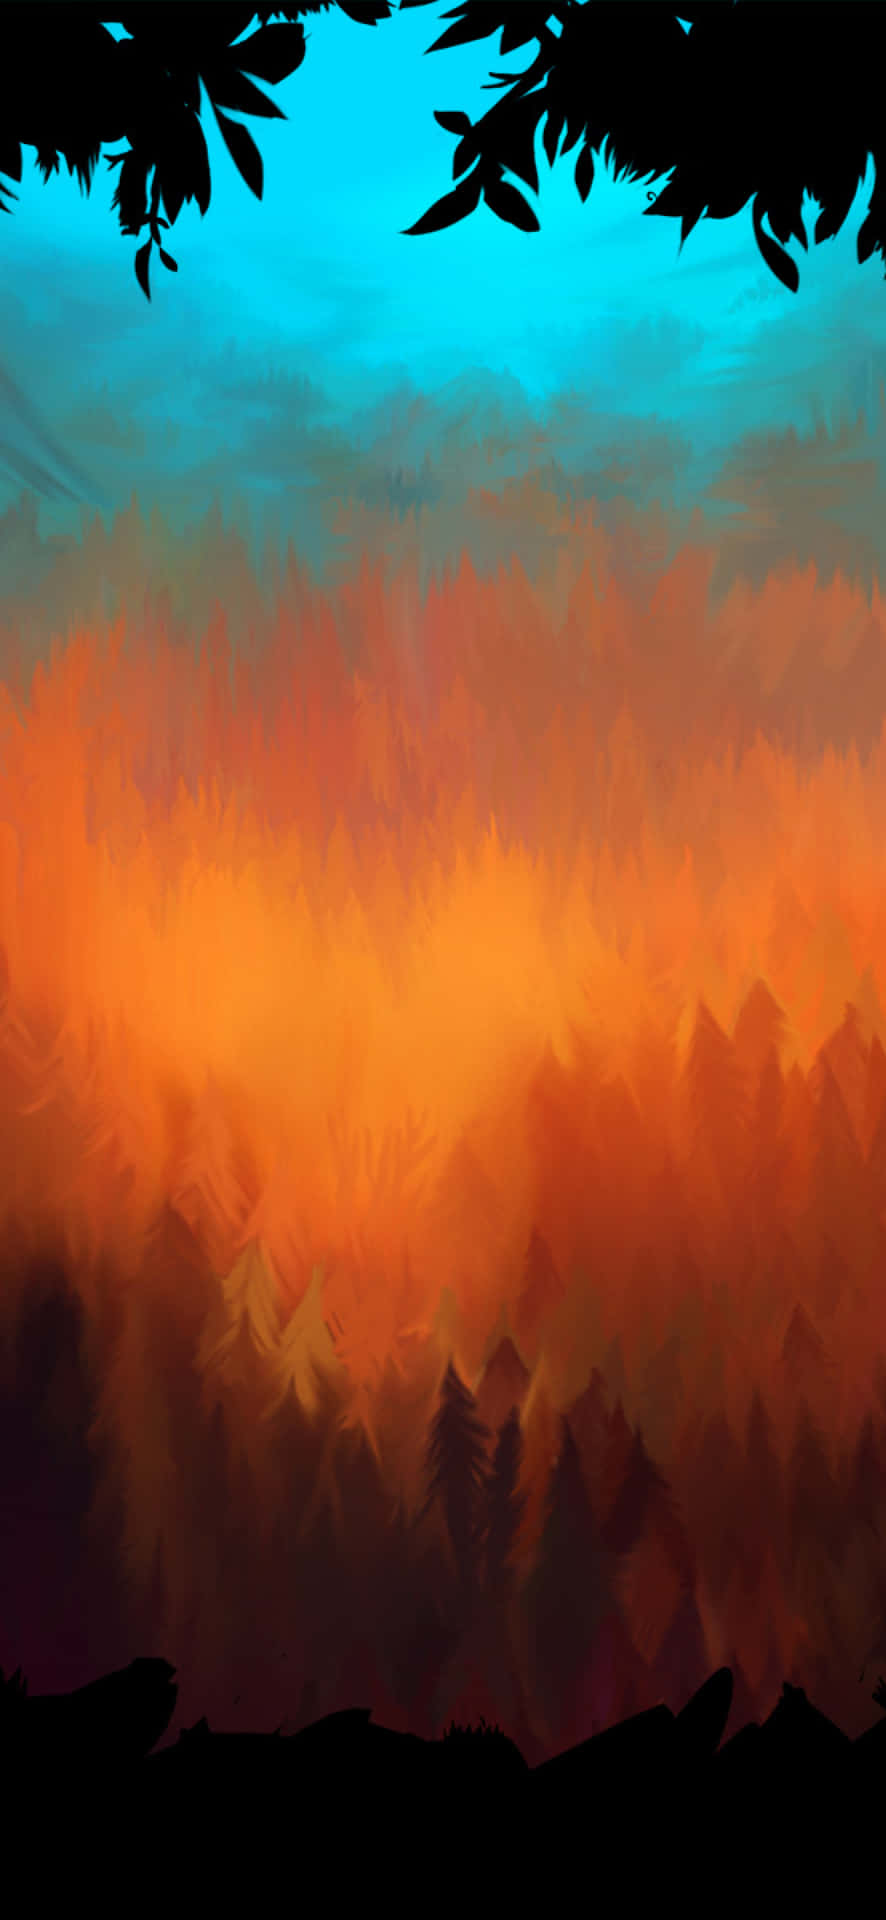 Abstract Forest Sunset Artwork Wallpaper